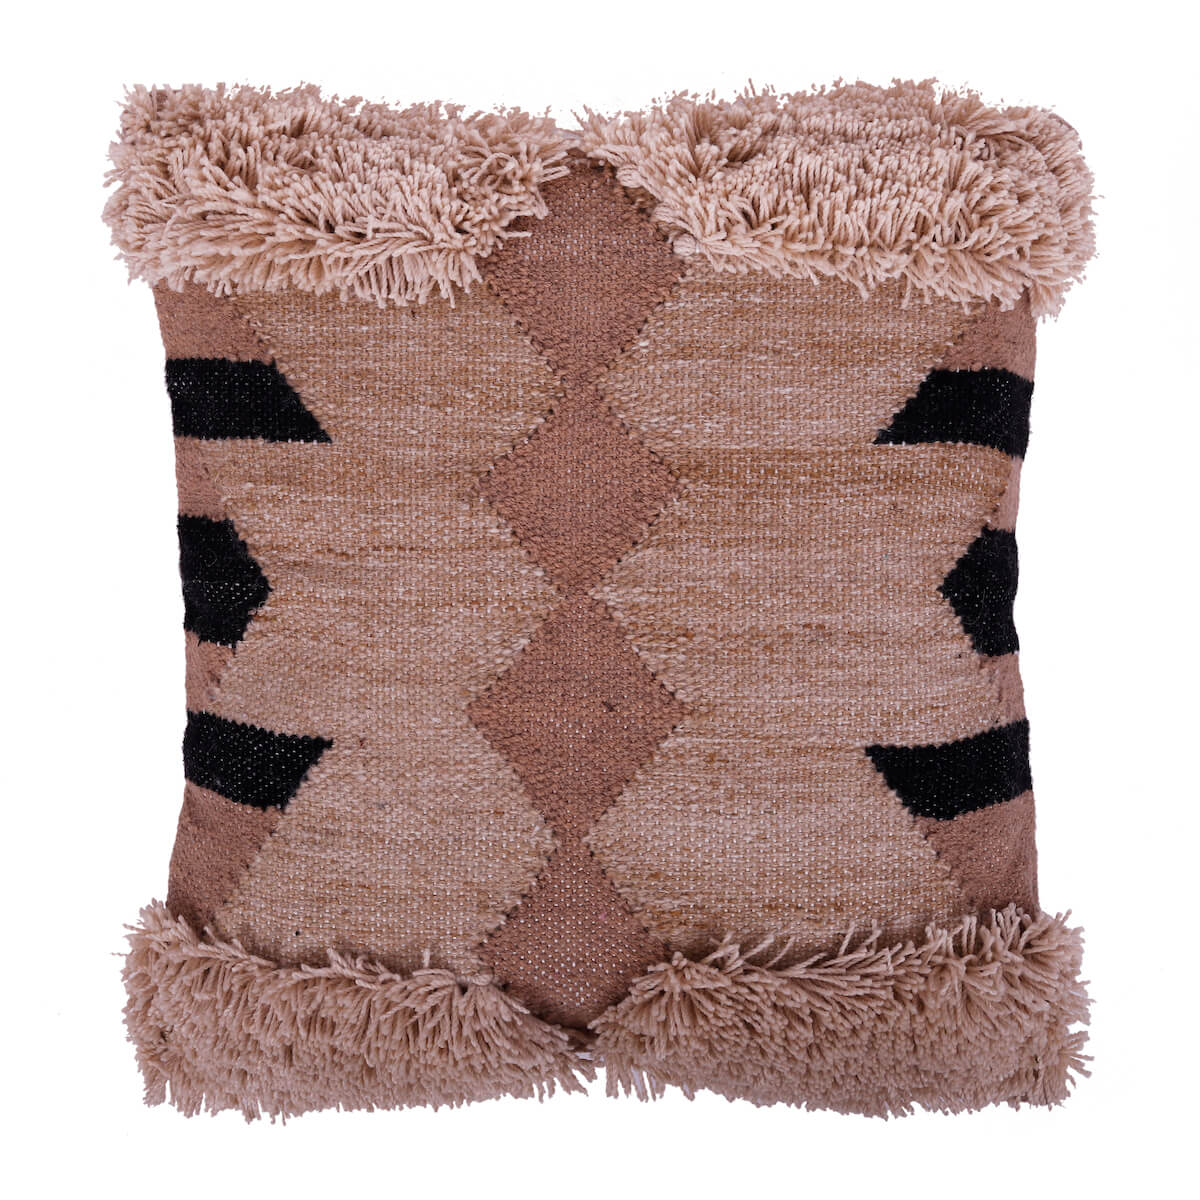 Tuffted Edge Pattern Woven Handloom Boho Look Brown Colour Cushion Cover Size 18"x18"